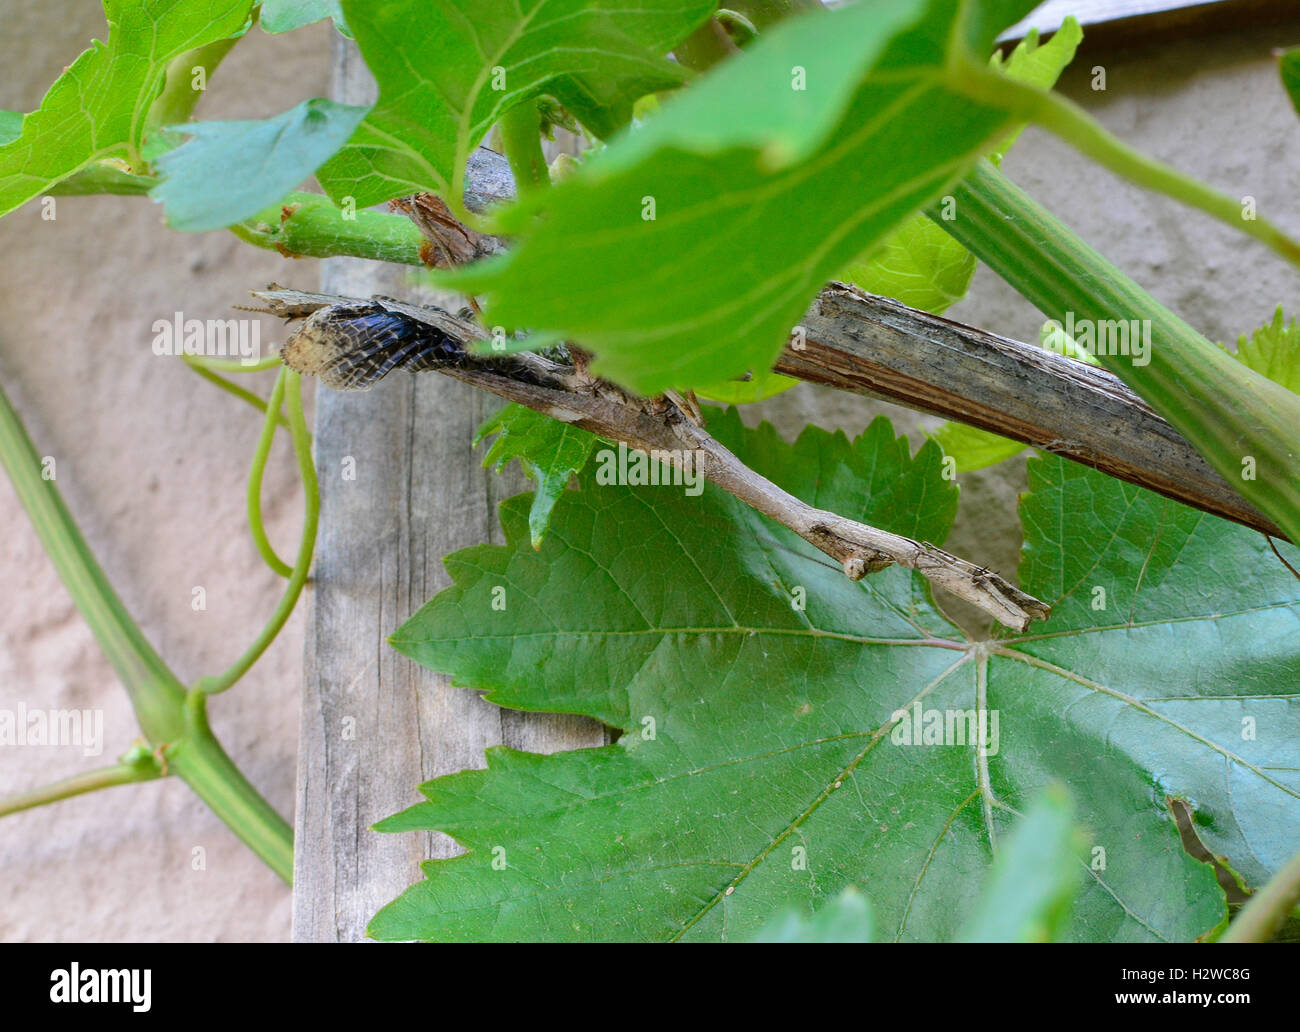 Master of disguise. Stick Insect. Stick Praying Mantis. Phasmida. Master of camouflage. Stick mantis. Stock Photo